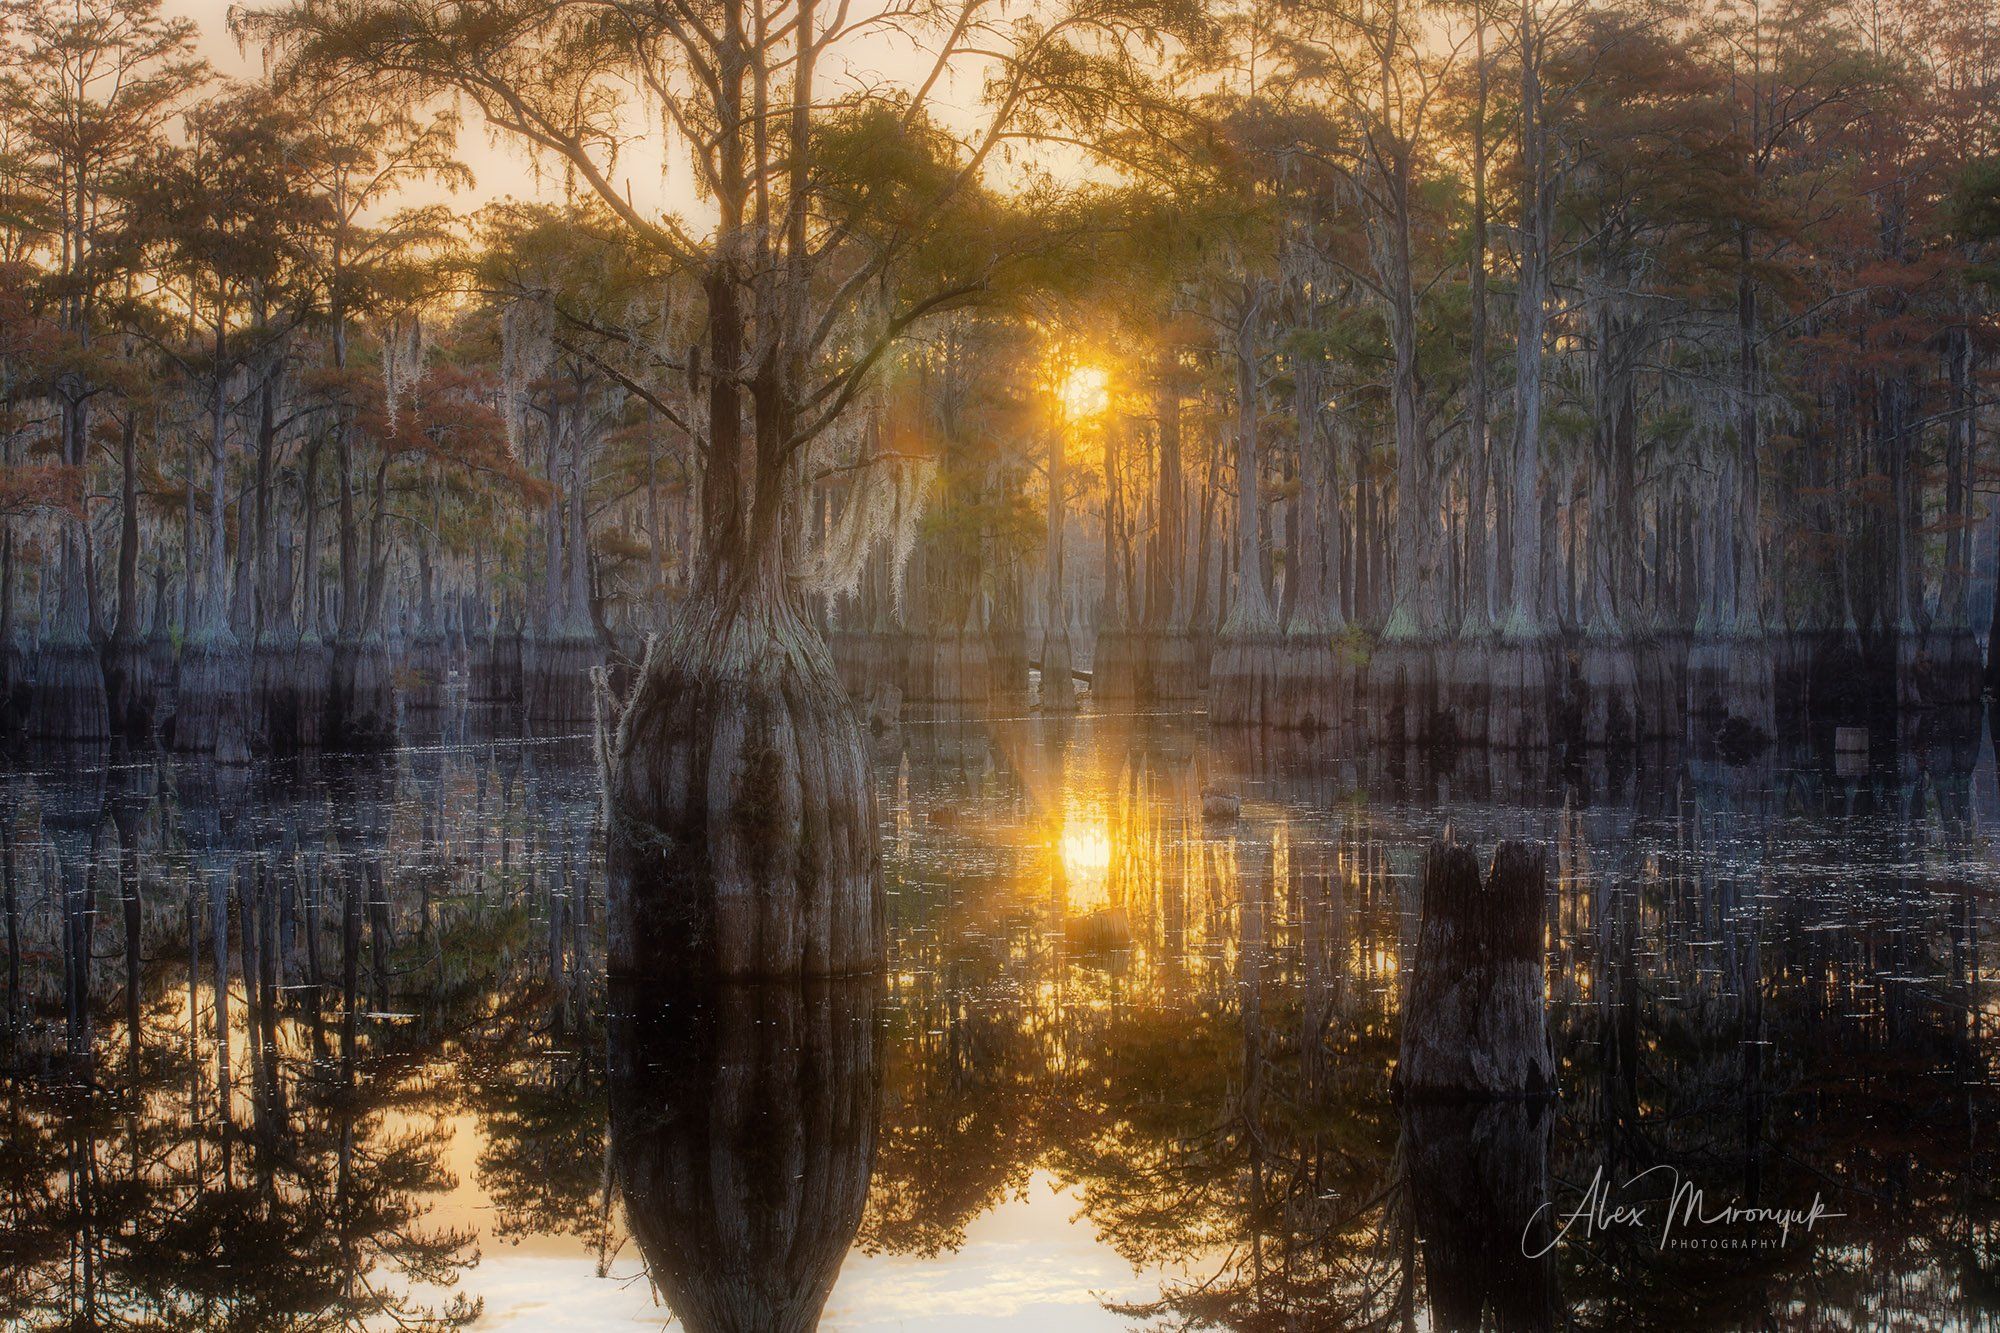 кипарис, болото, озеро, отражение, вода, туман, утро, осень, фото-тур, США, Alex Mironyuk